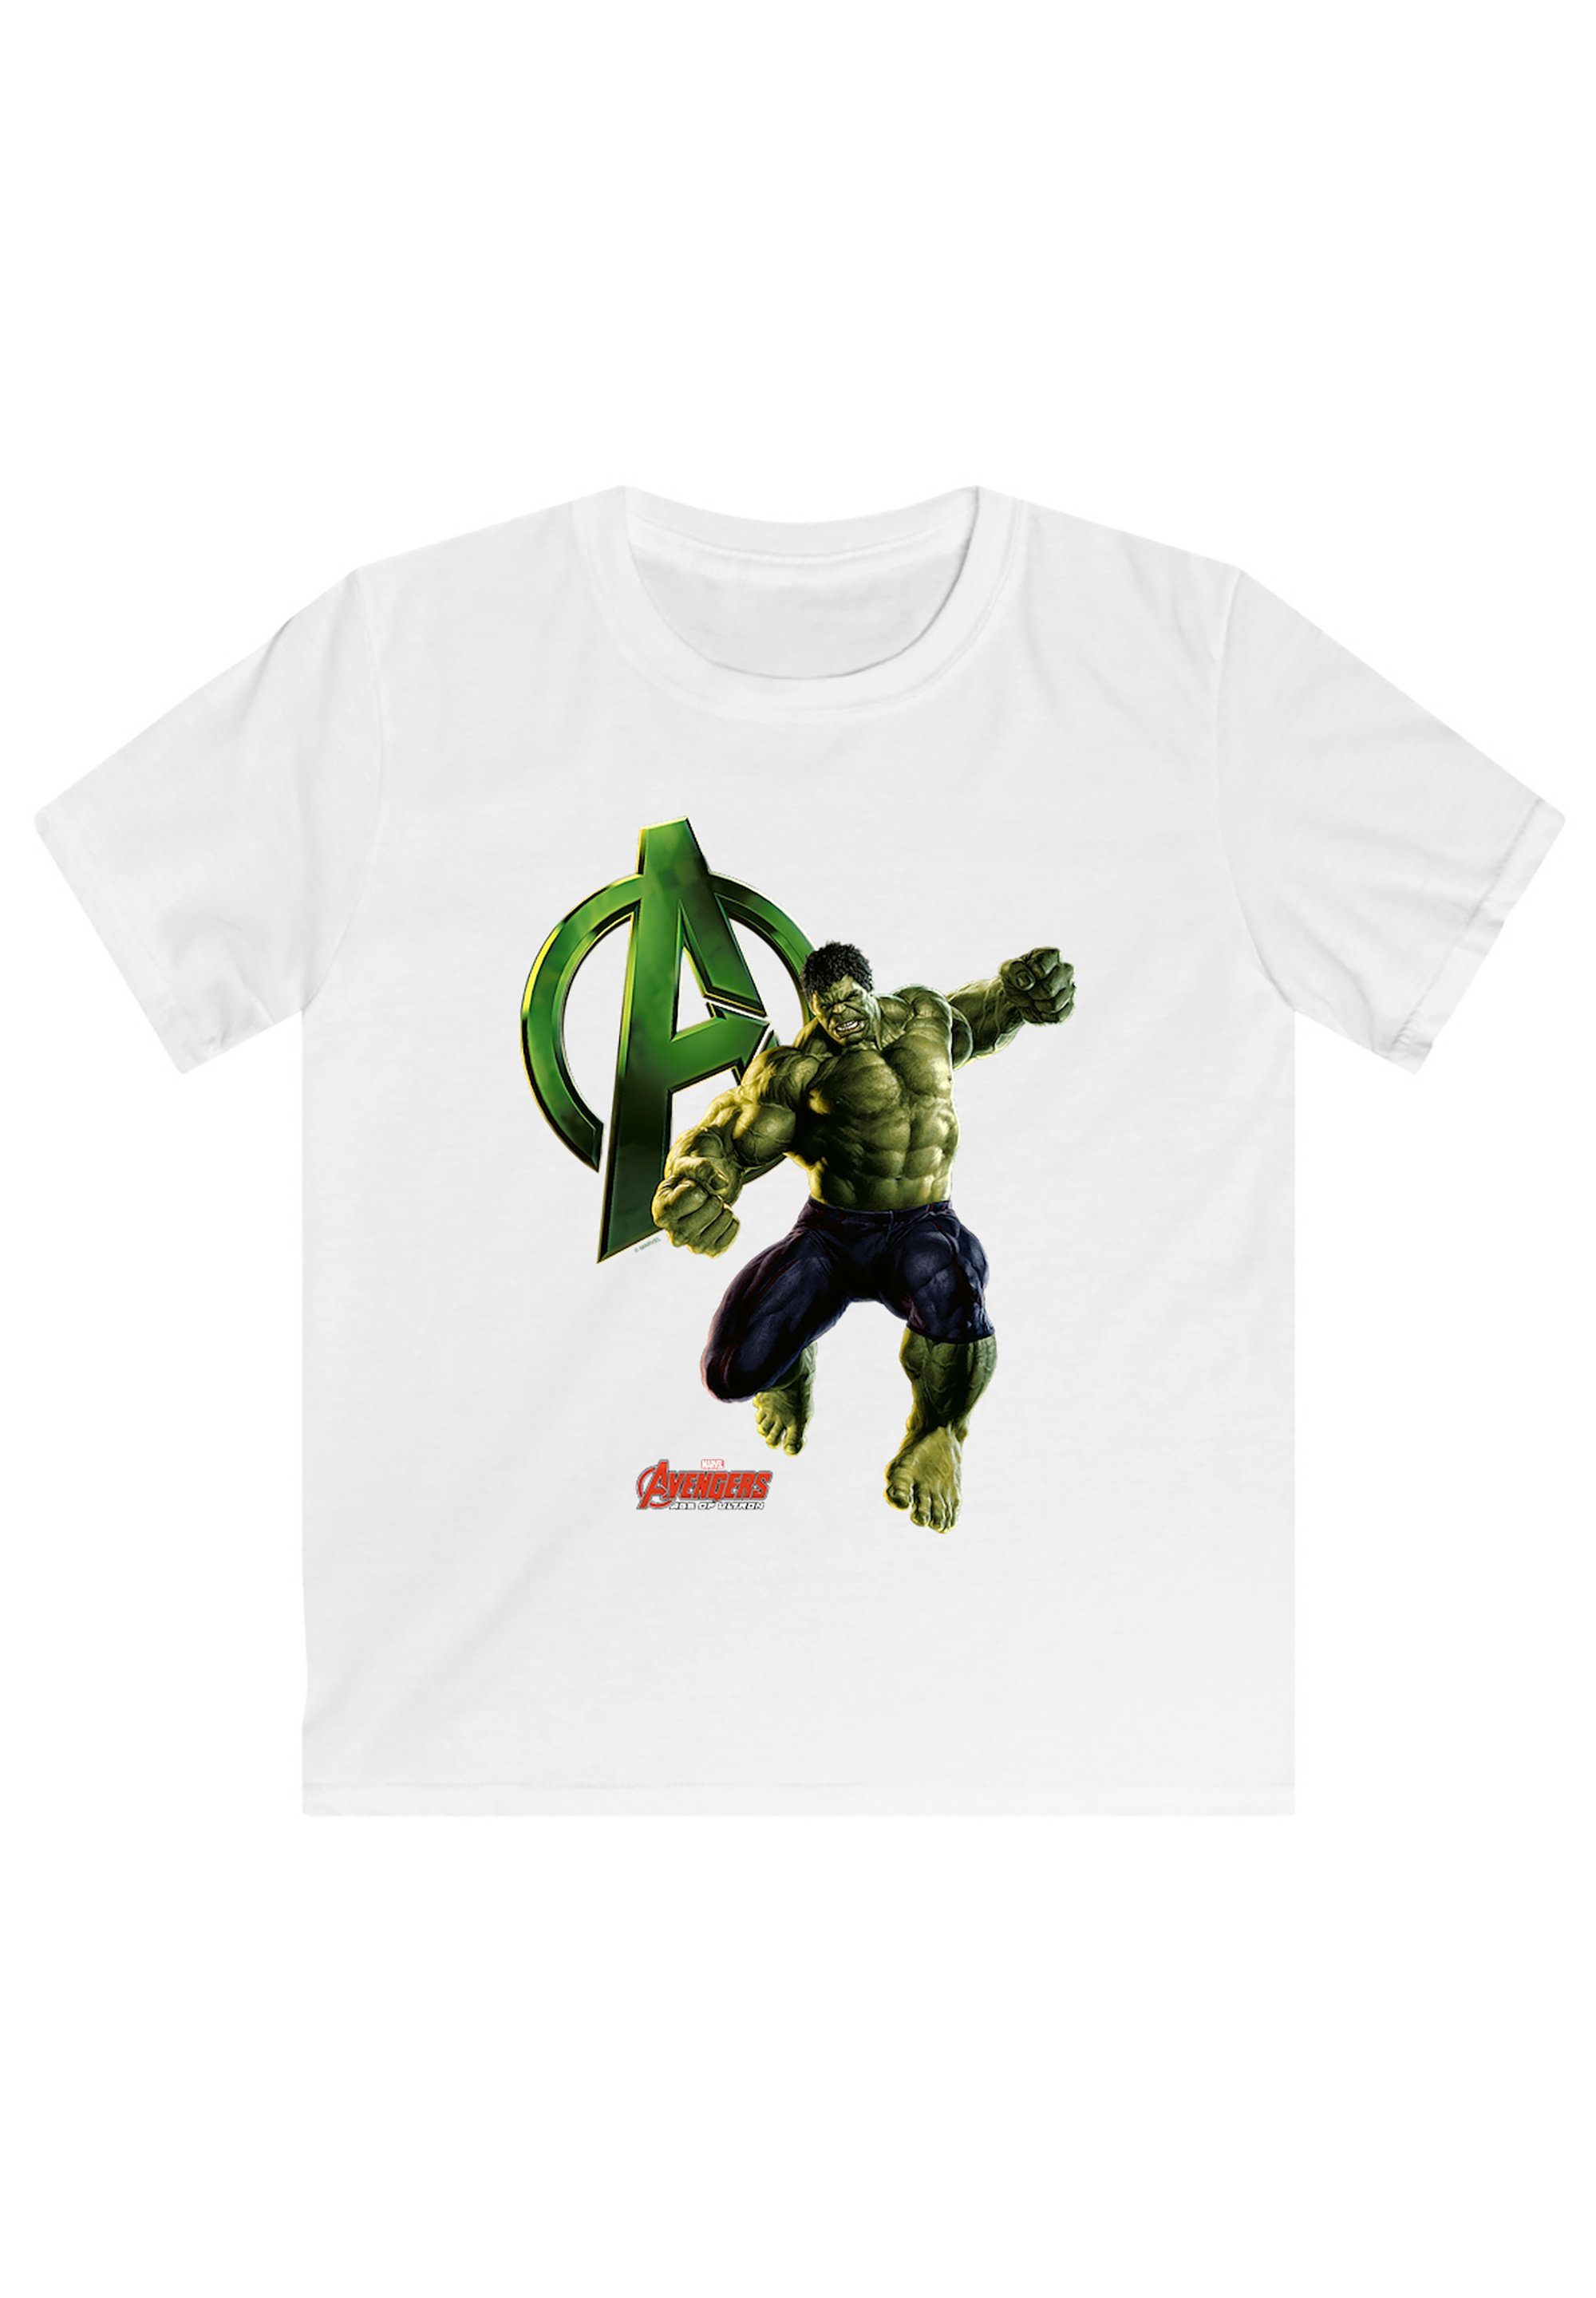 F4NT4STIC T-Shirt Age Ultron Avengers Hulk Incredible of Marvel Print